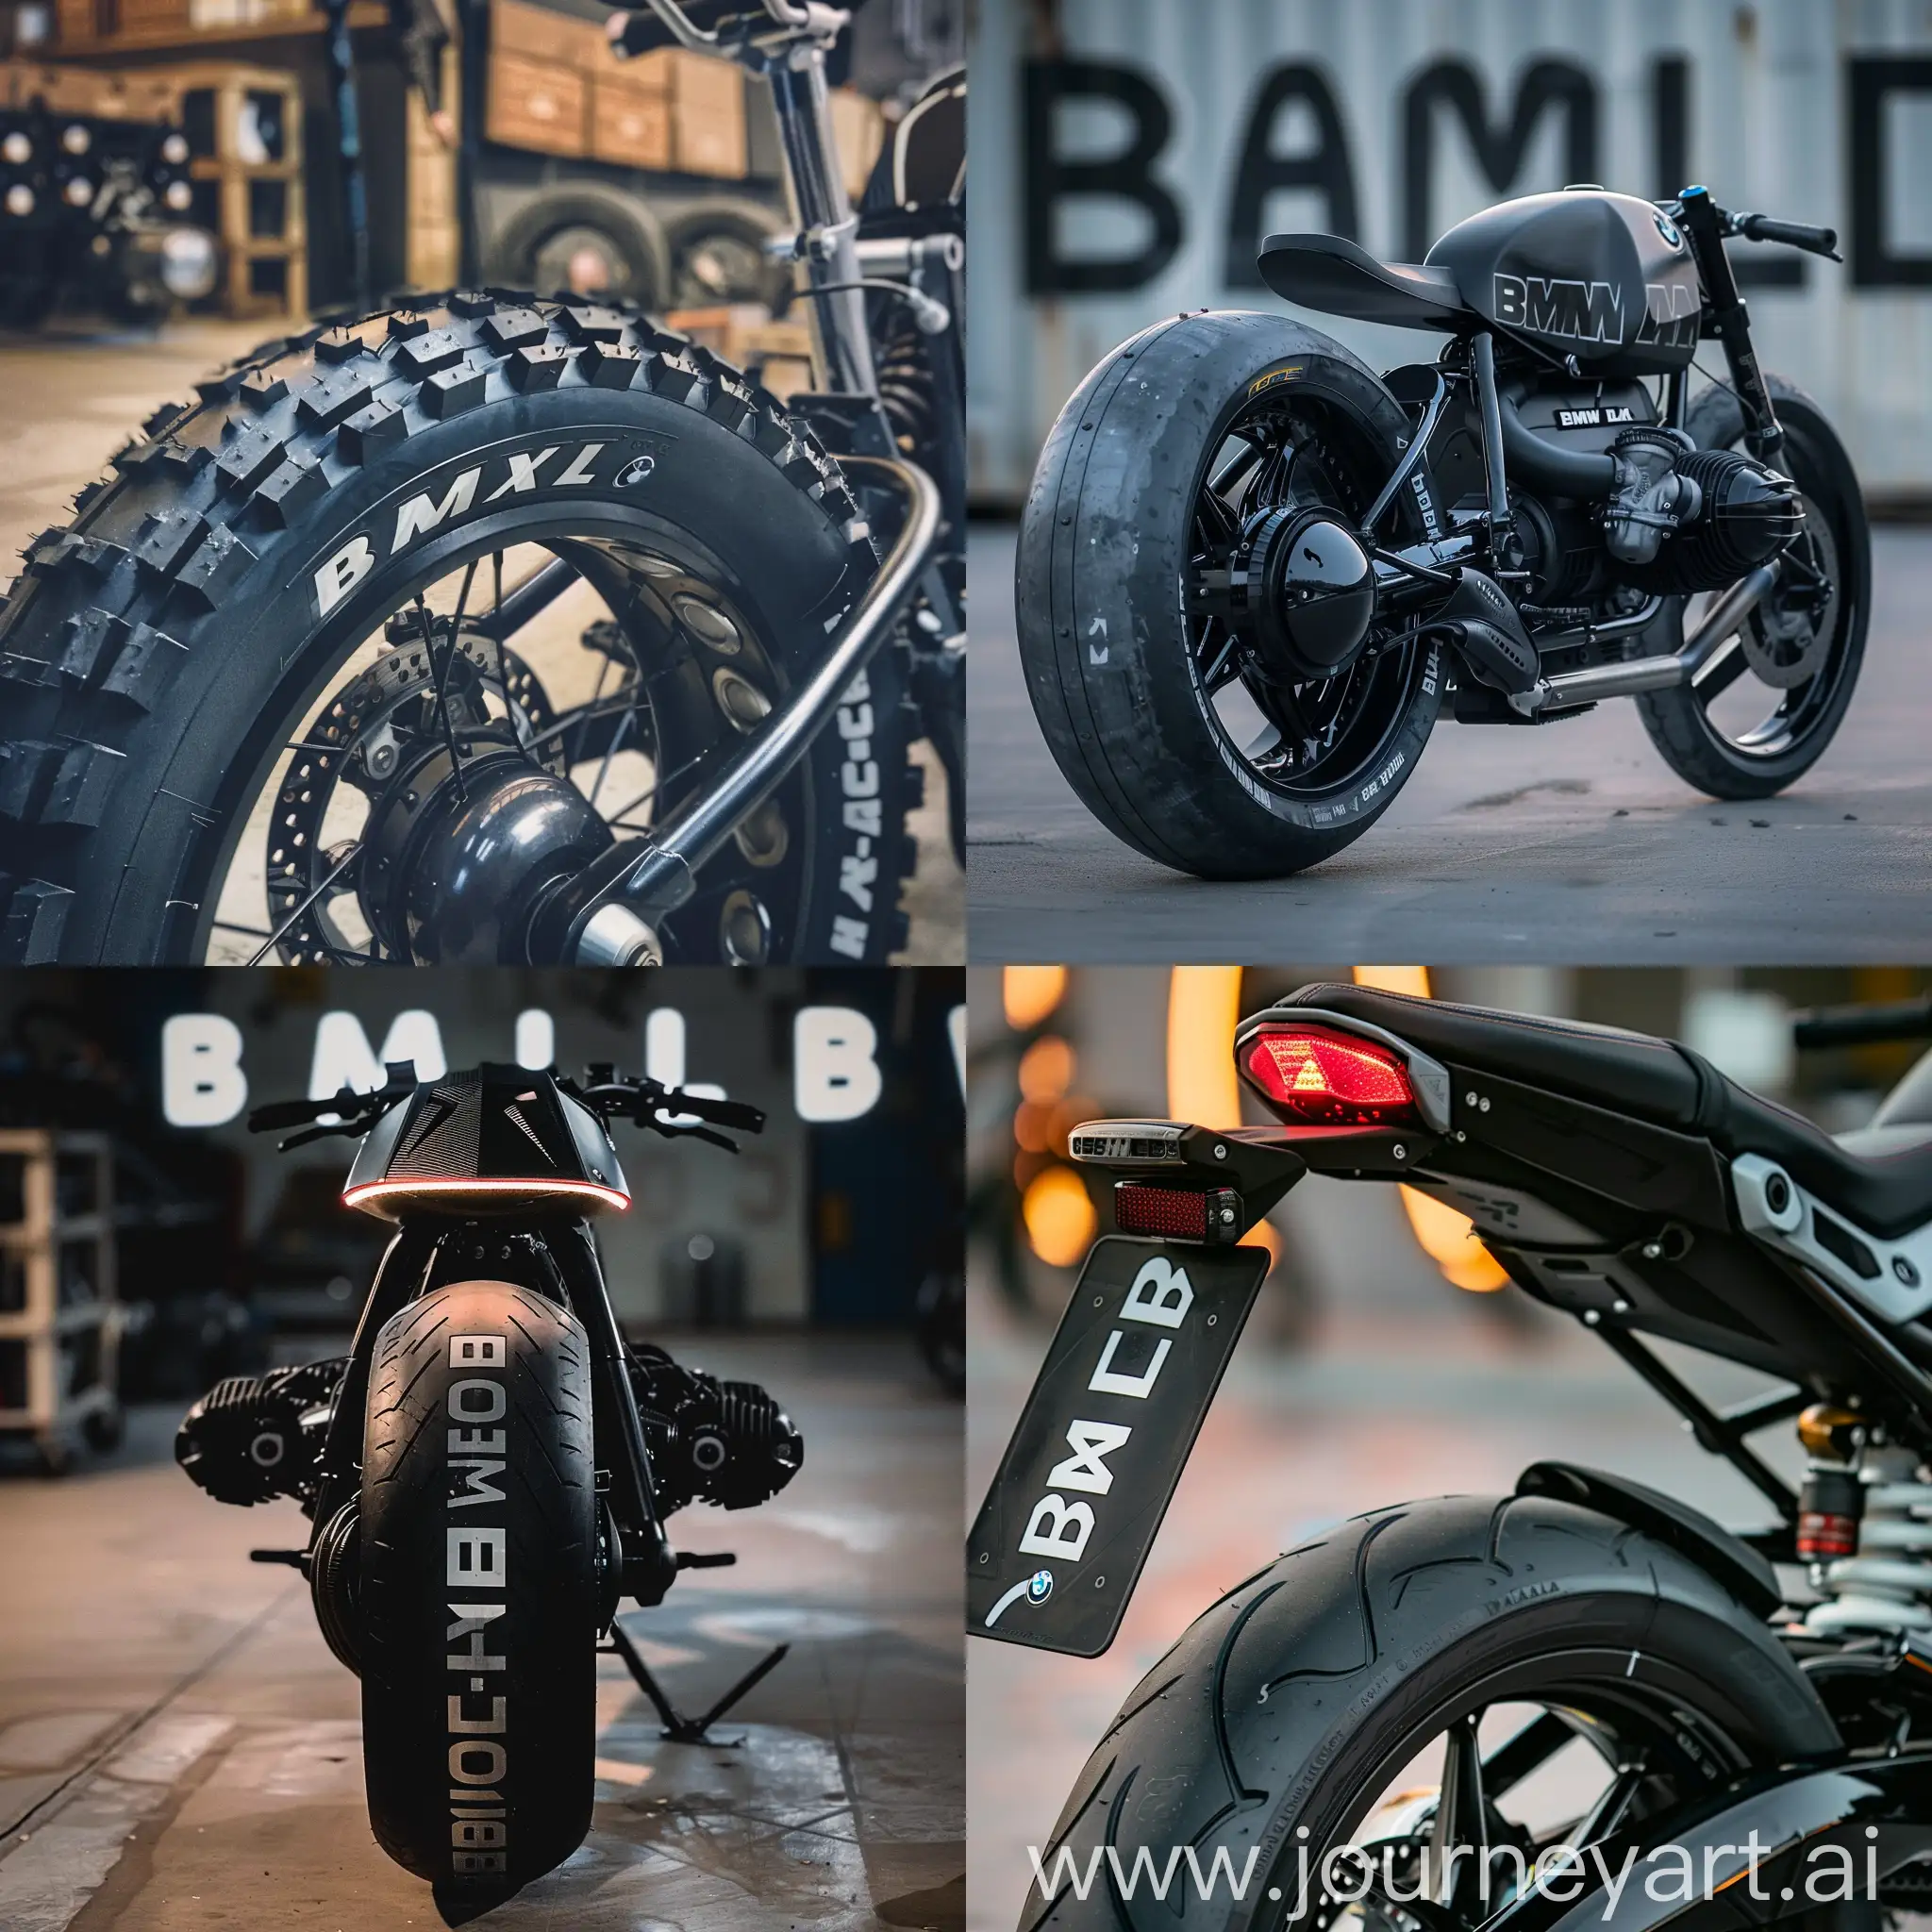 BikeLab_SA🇿🇦 logo, at the back of the faint logo must be a bmw R1000 bike.